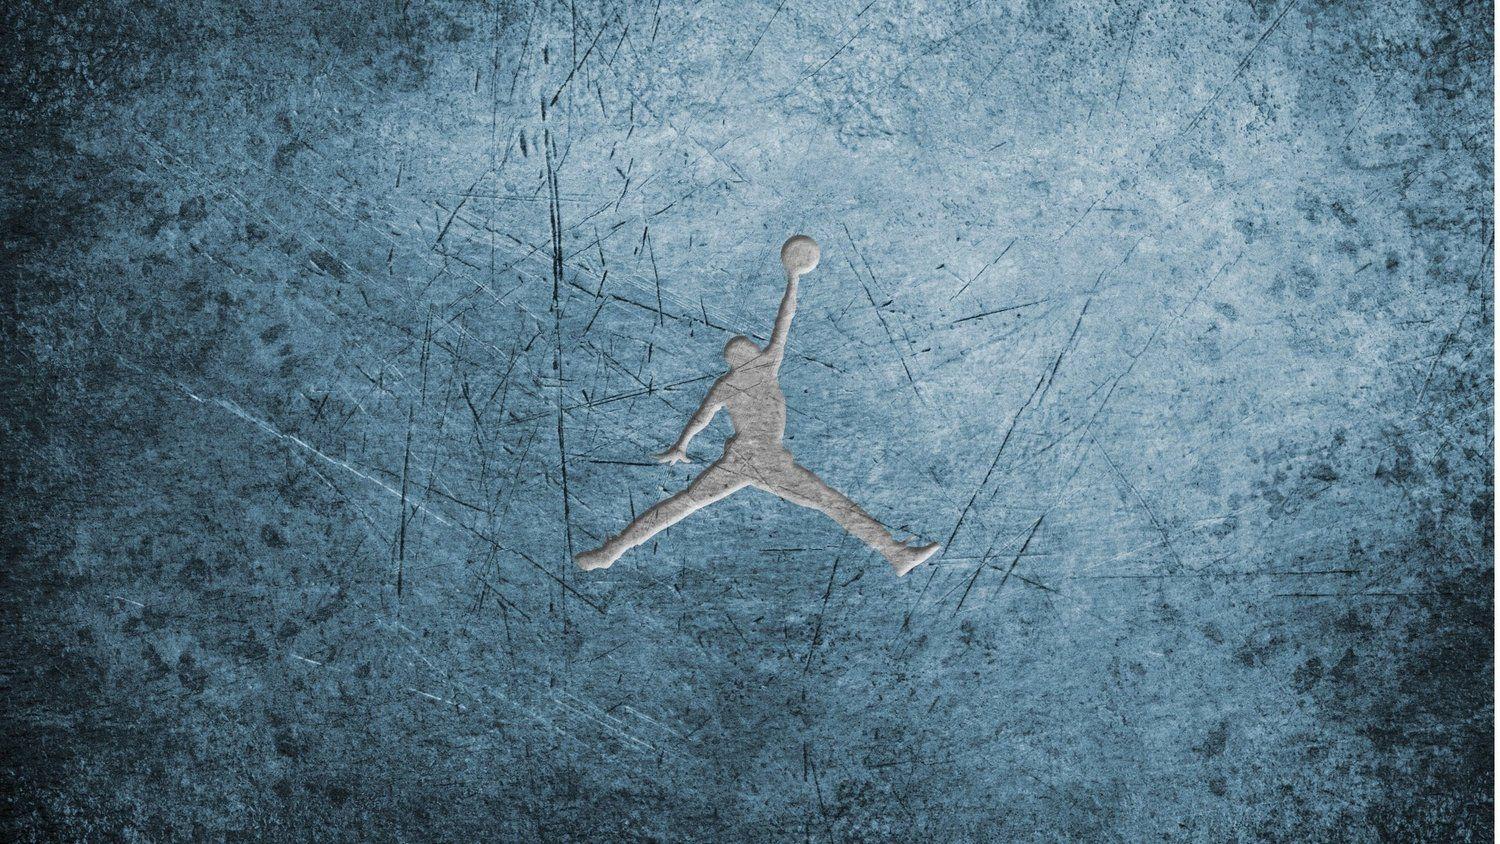 The Jordan Brand